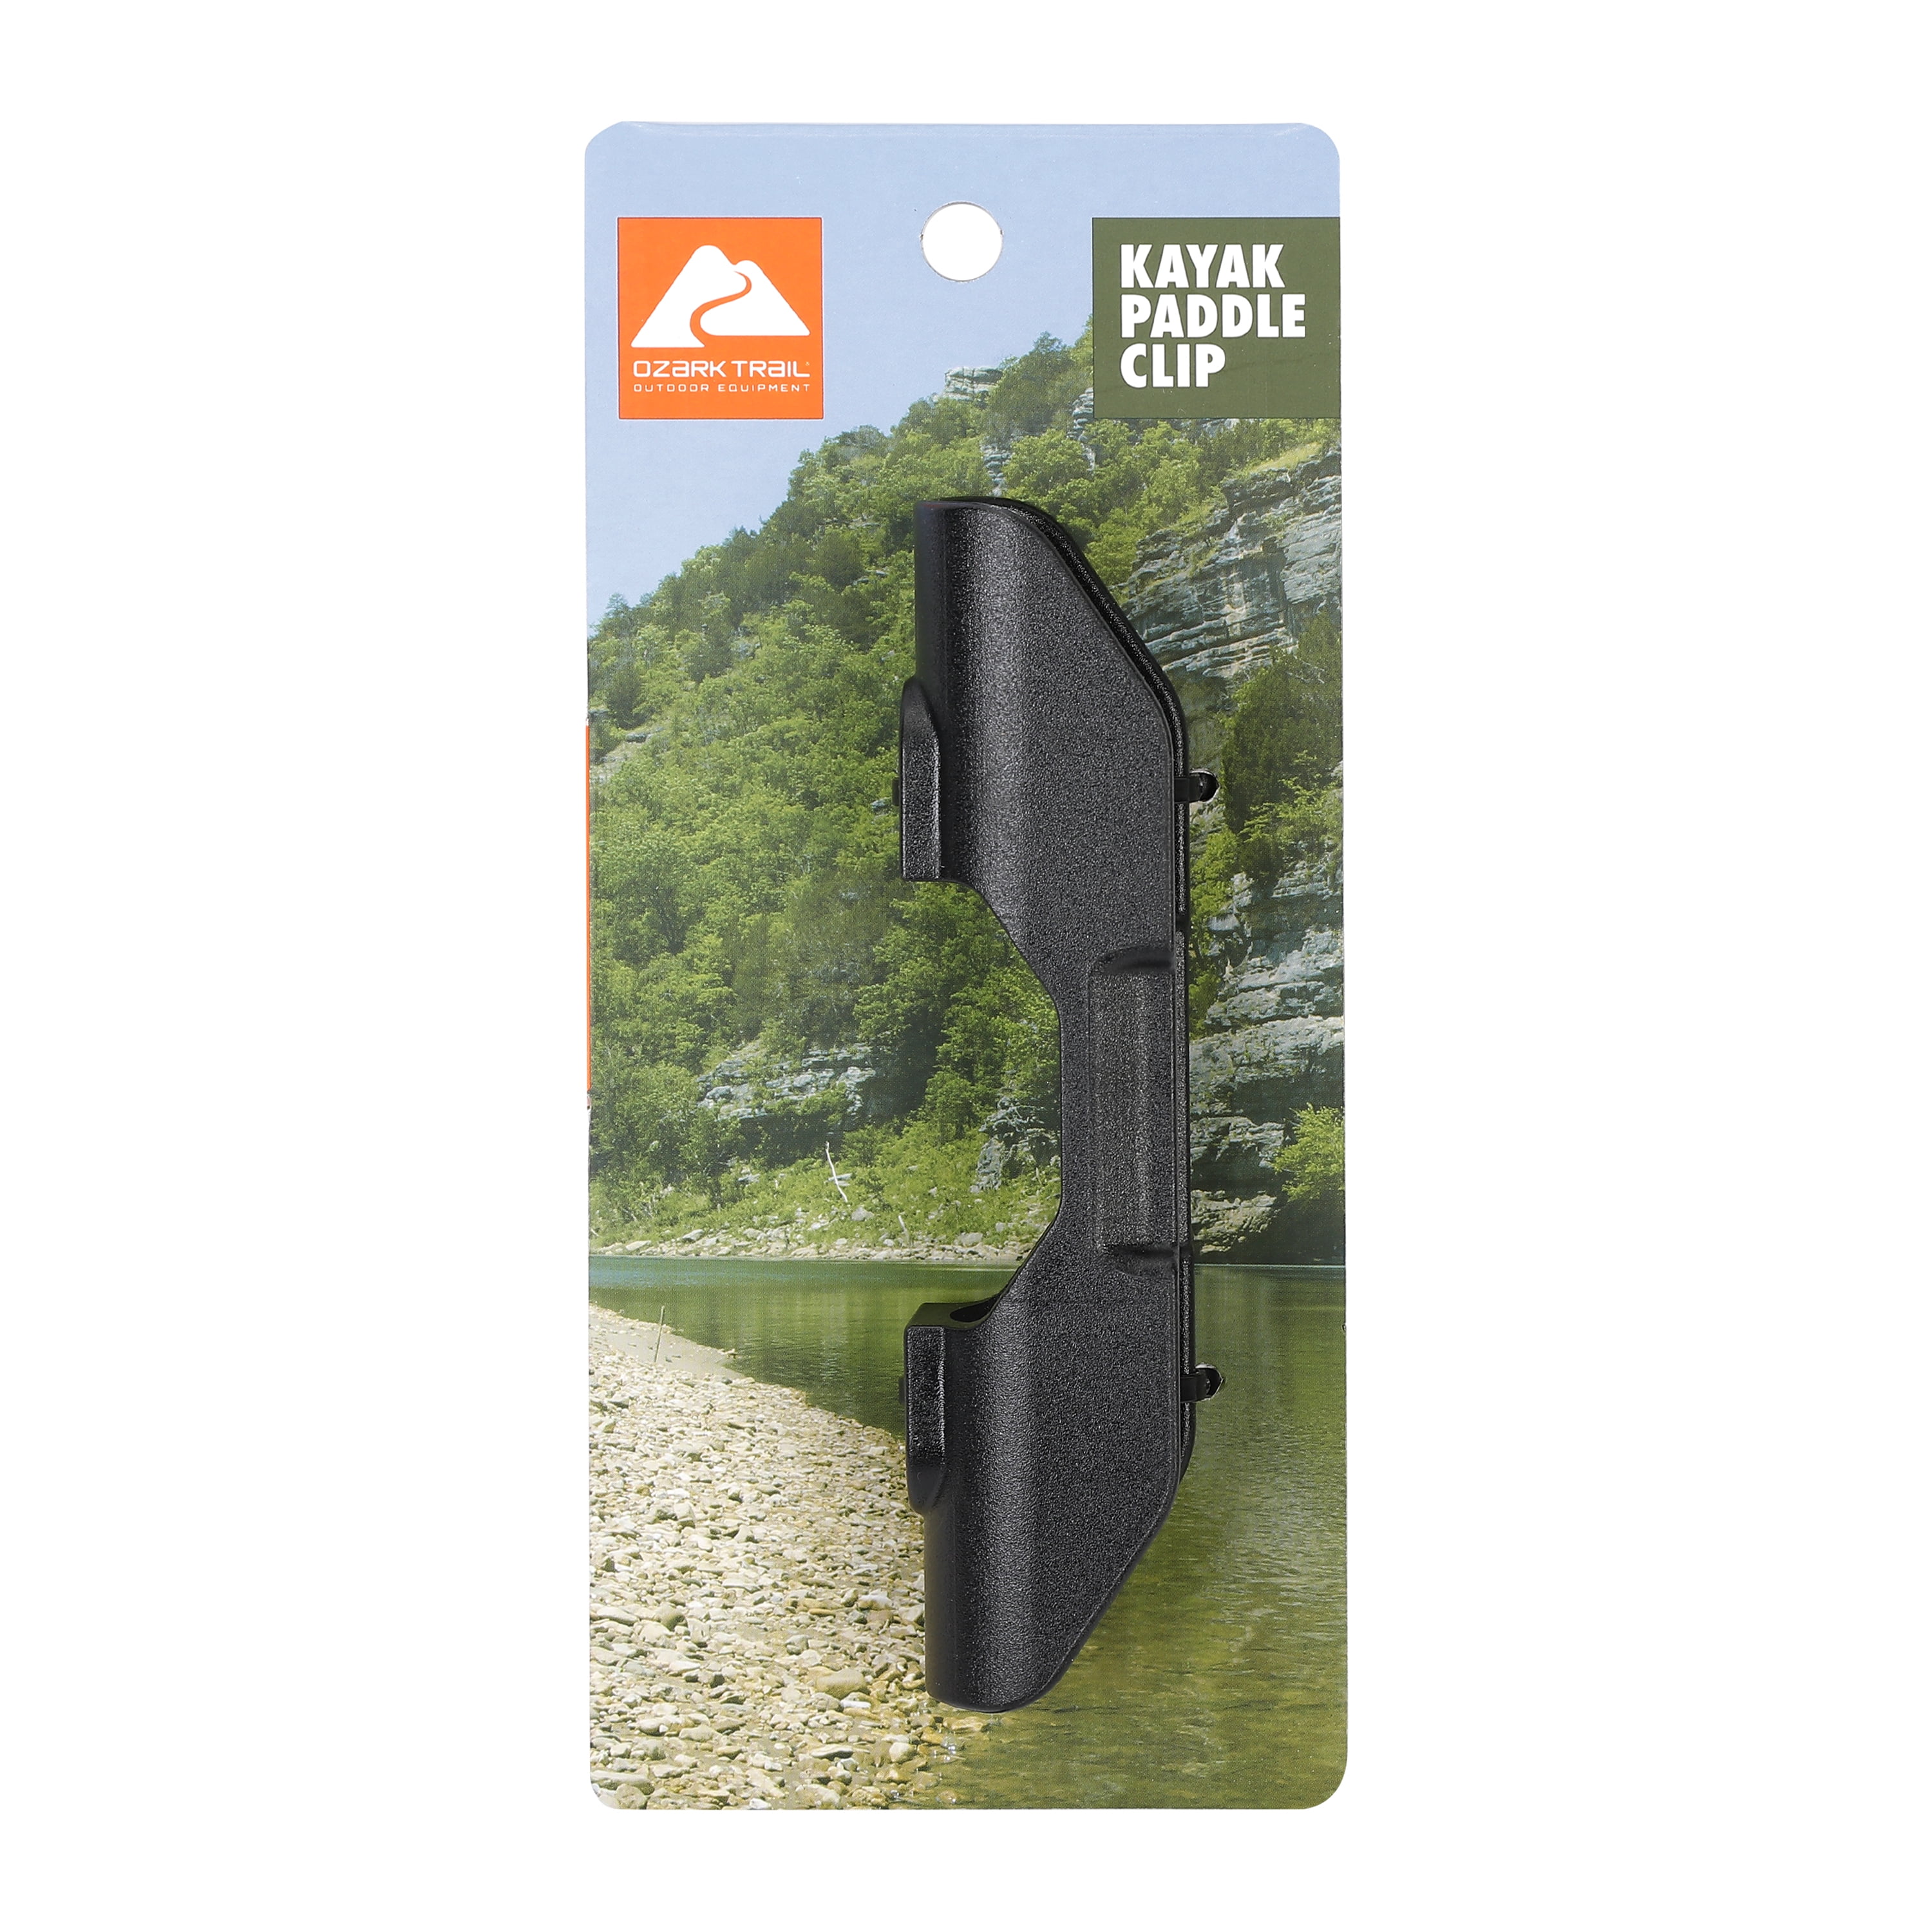 4 PACK Best Neon Green Universal Kayak Scupper Plug Kit Drain Hole   Accessories 